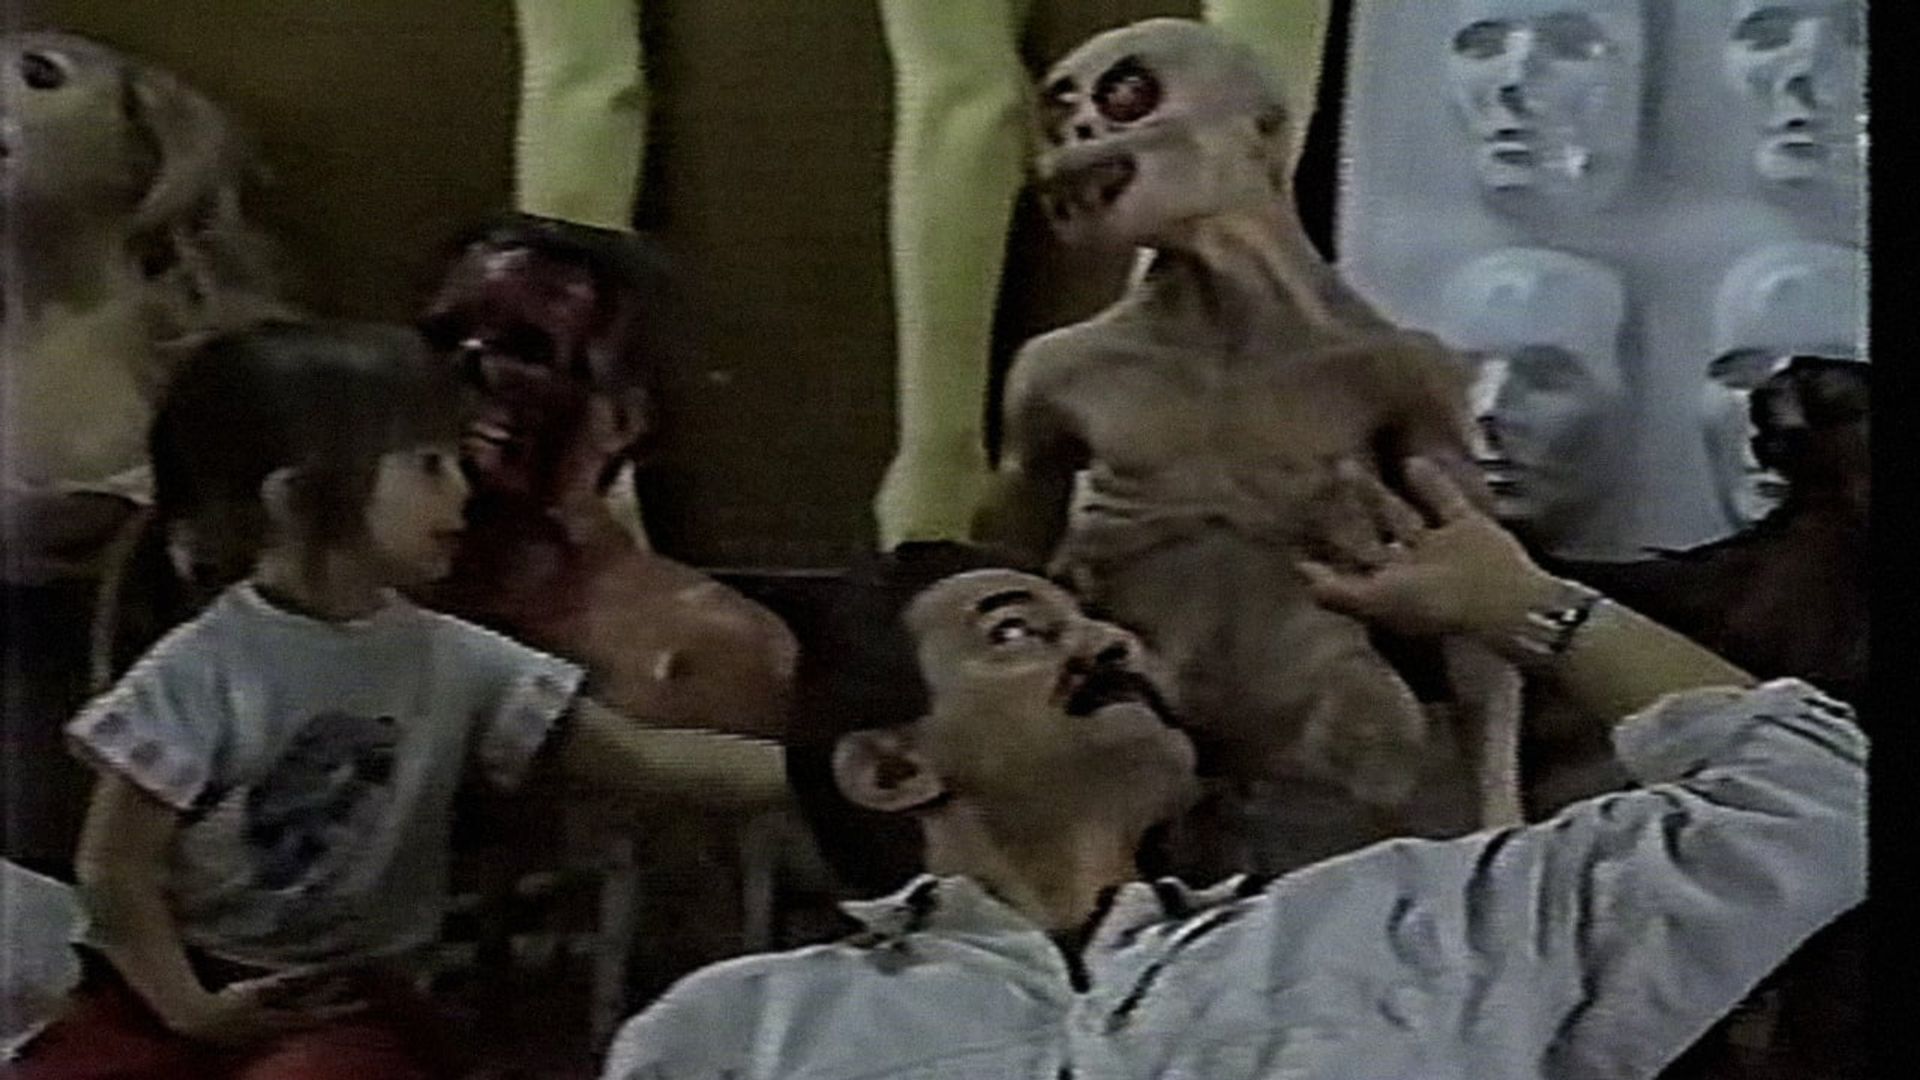 Tom Savini: Horror Effects background